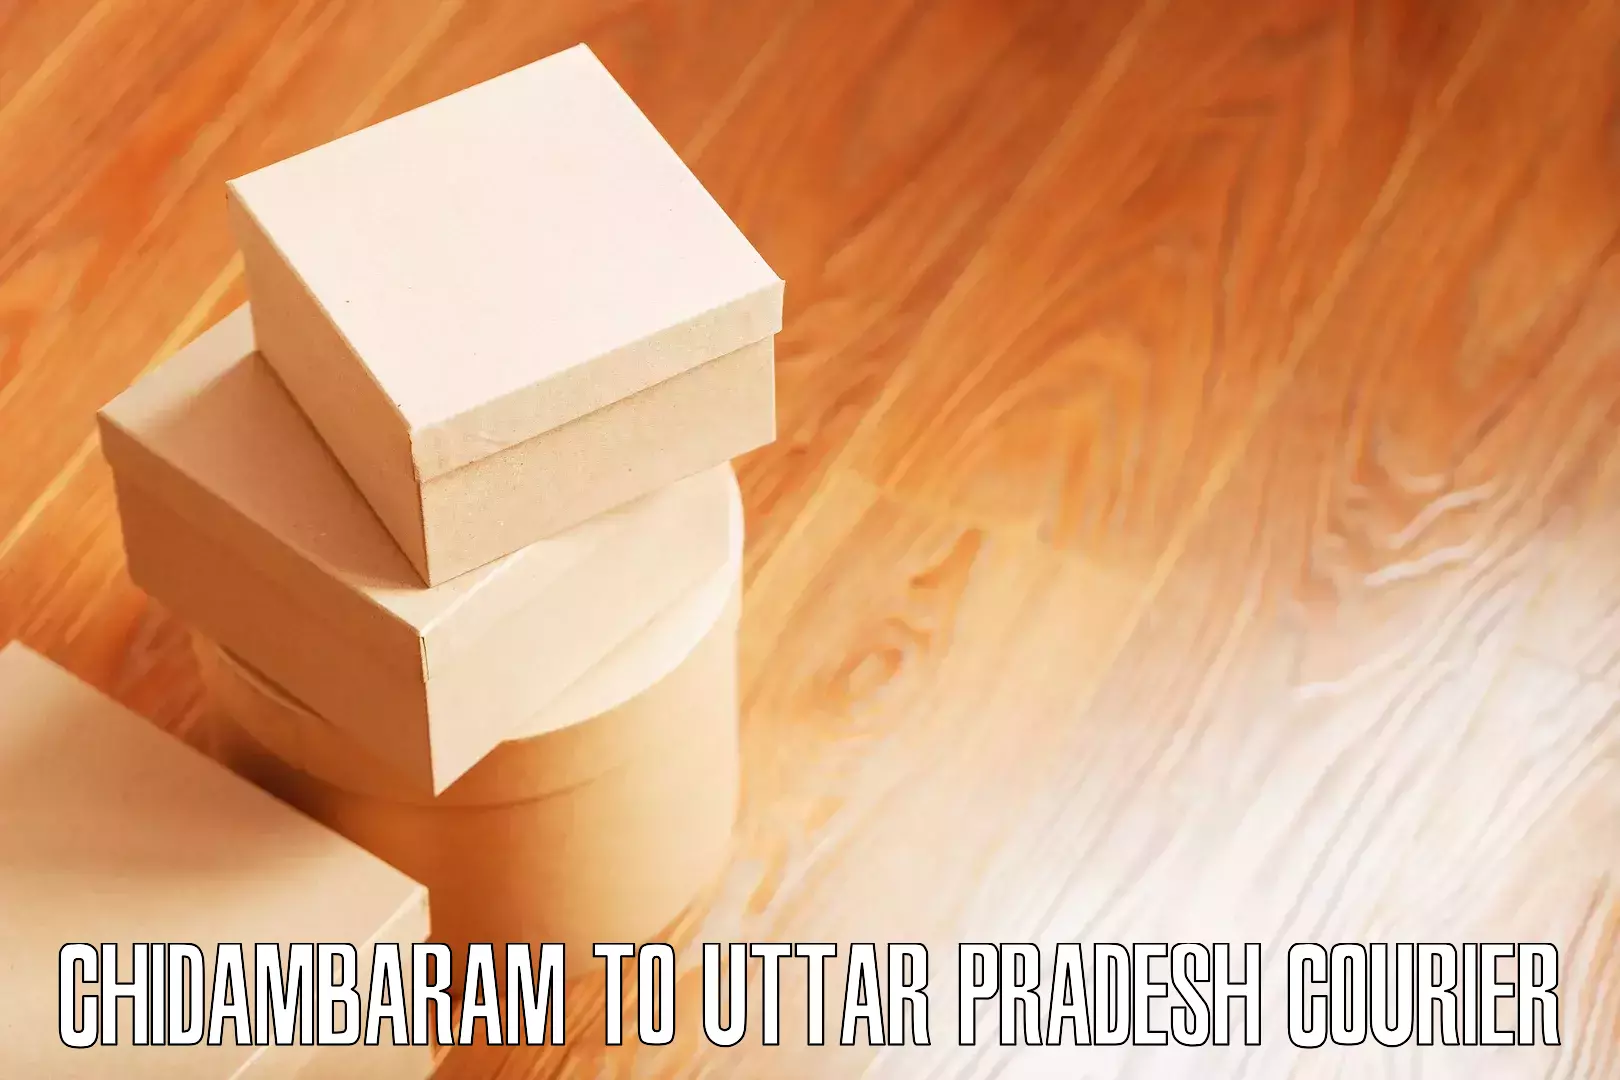 Furniture moving assistance Chidambaram to Aligarh